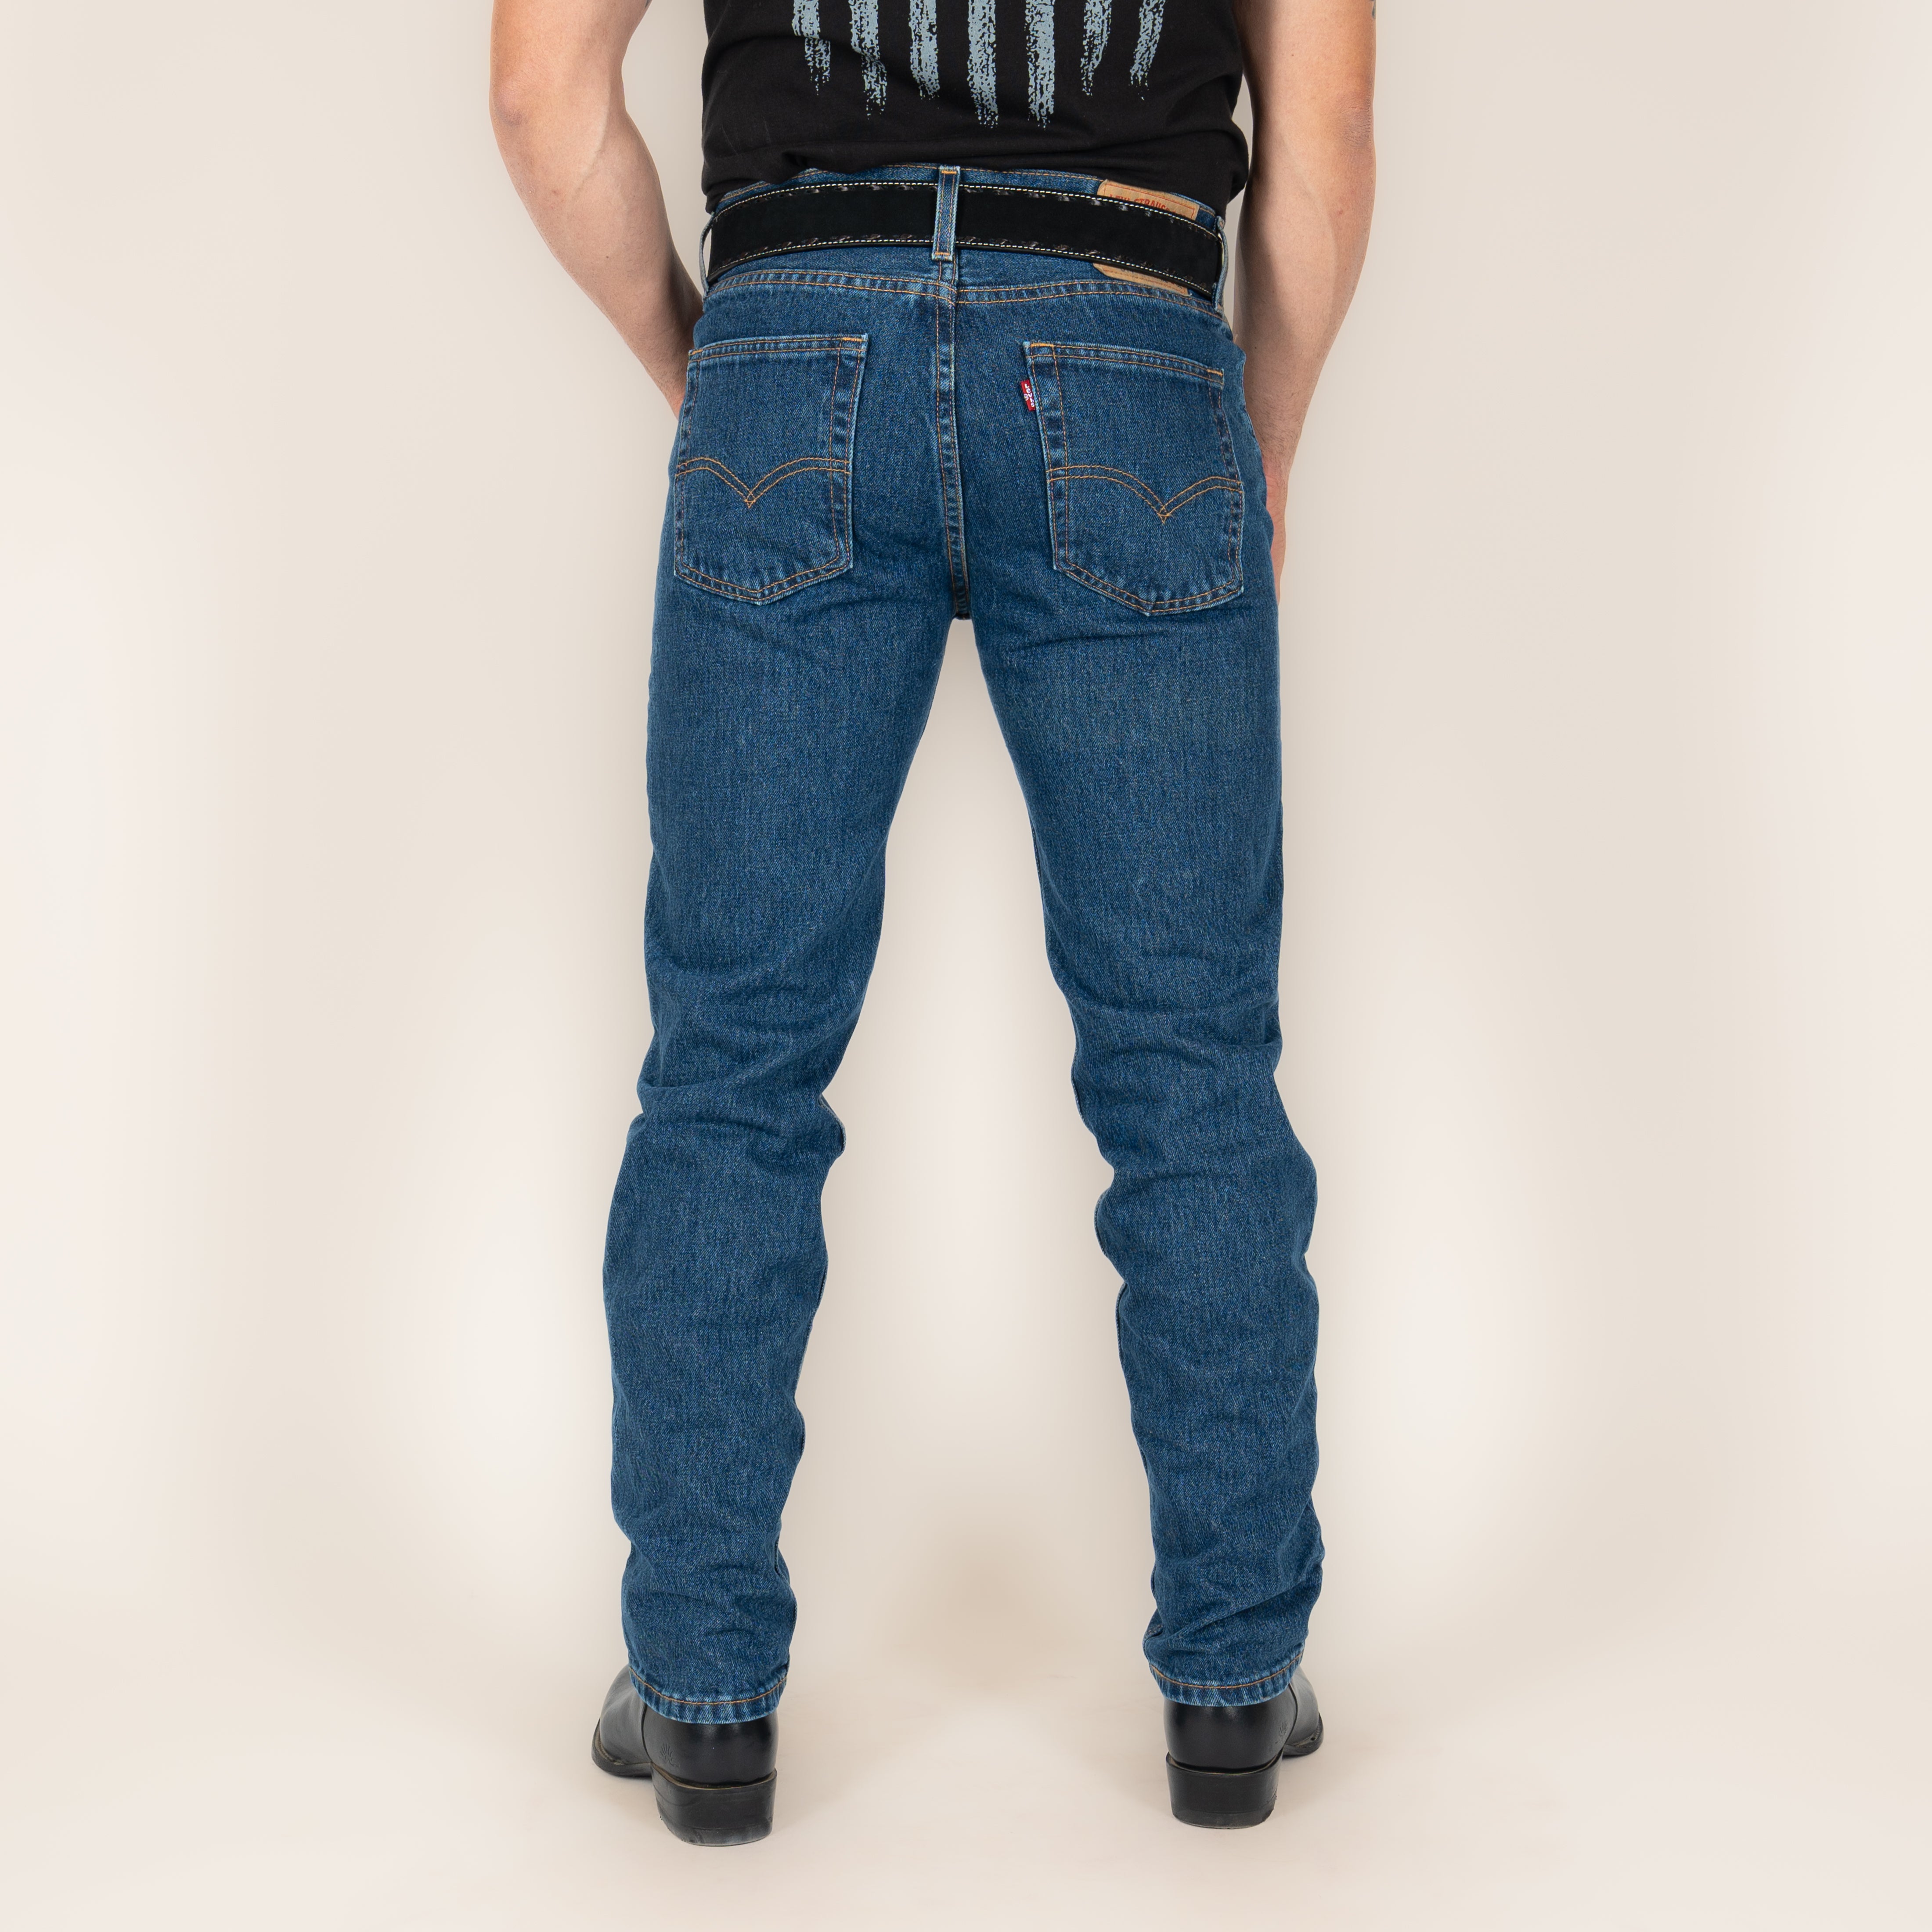 Jeans Levis 514 Straight Caballero